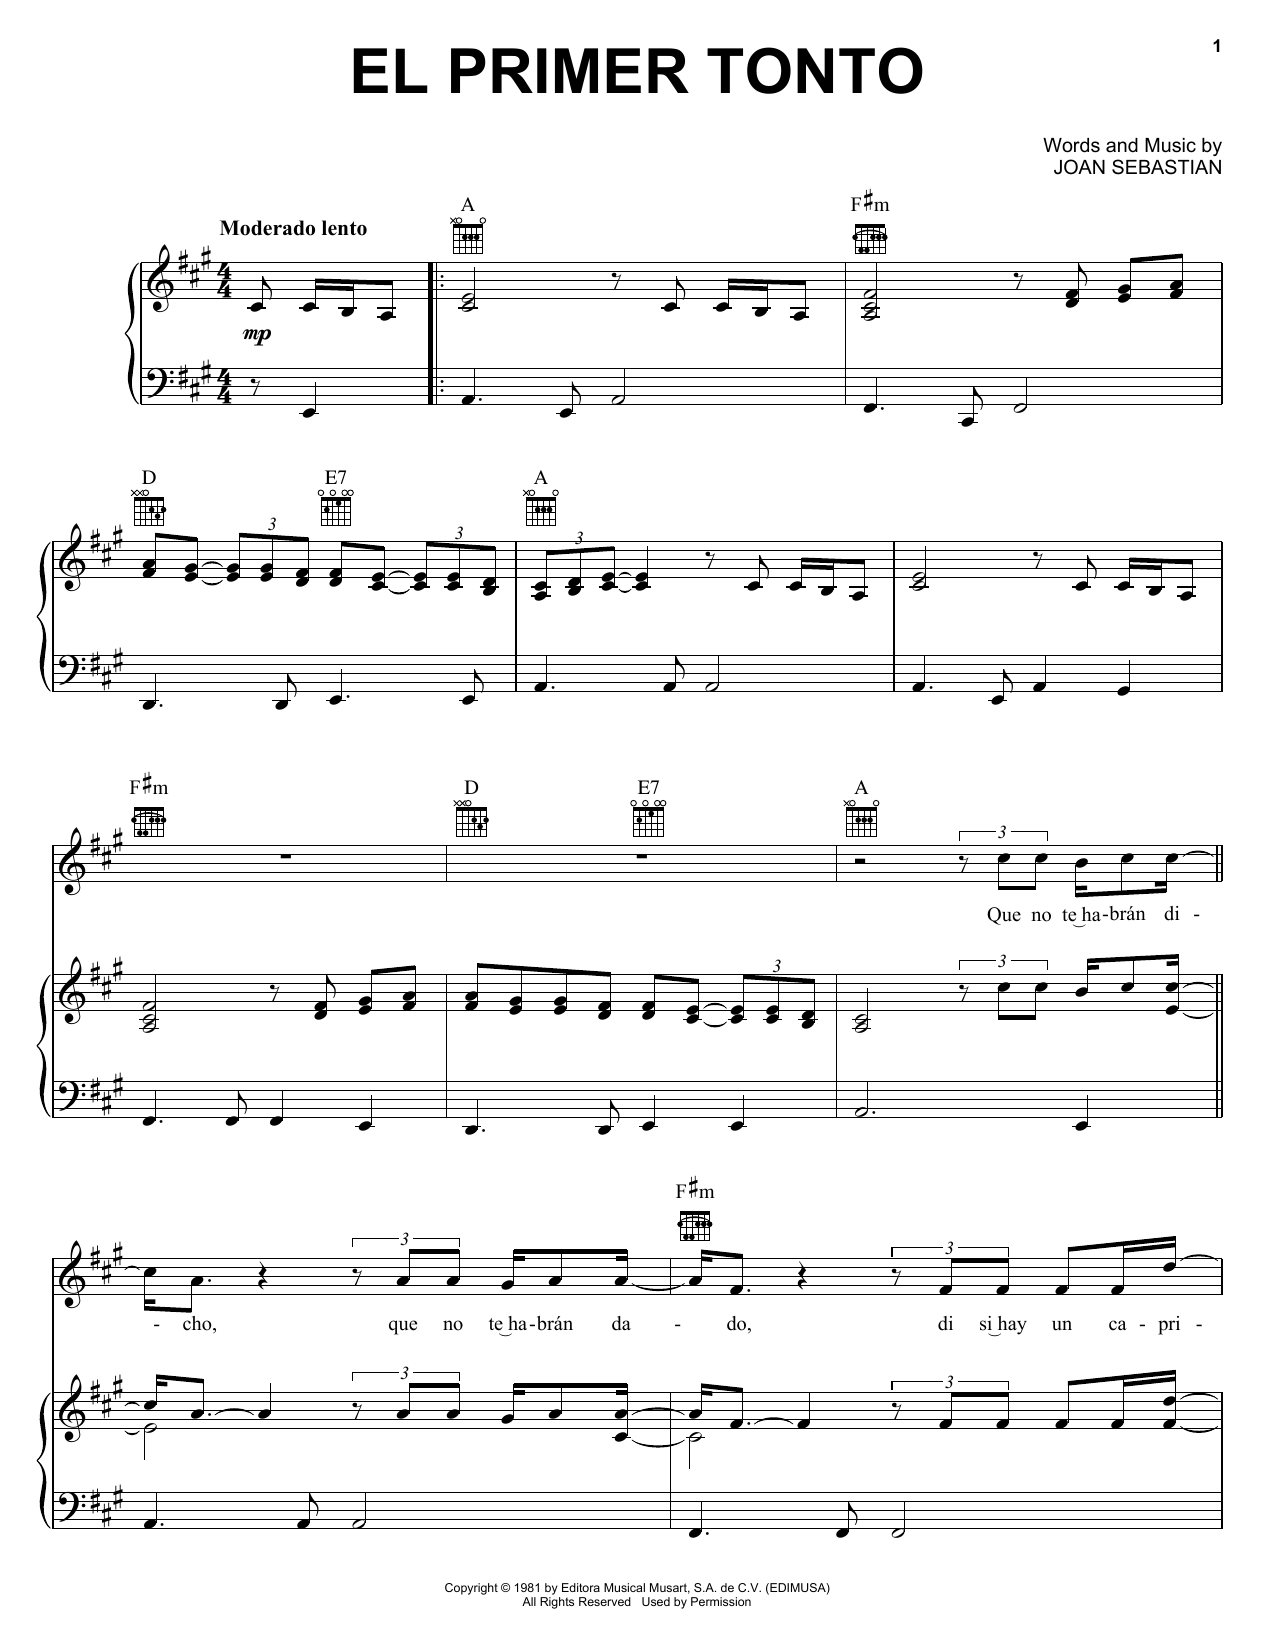 Joan Sebastian El Primer Tonto Sheet Music Notes & Chords for Piano, Vocal & Guitar (Right-Hand Melody) - Download or Print PDF